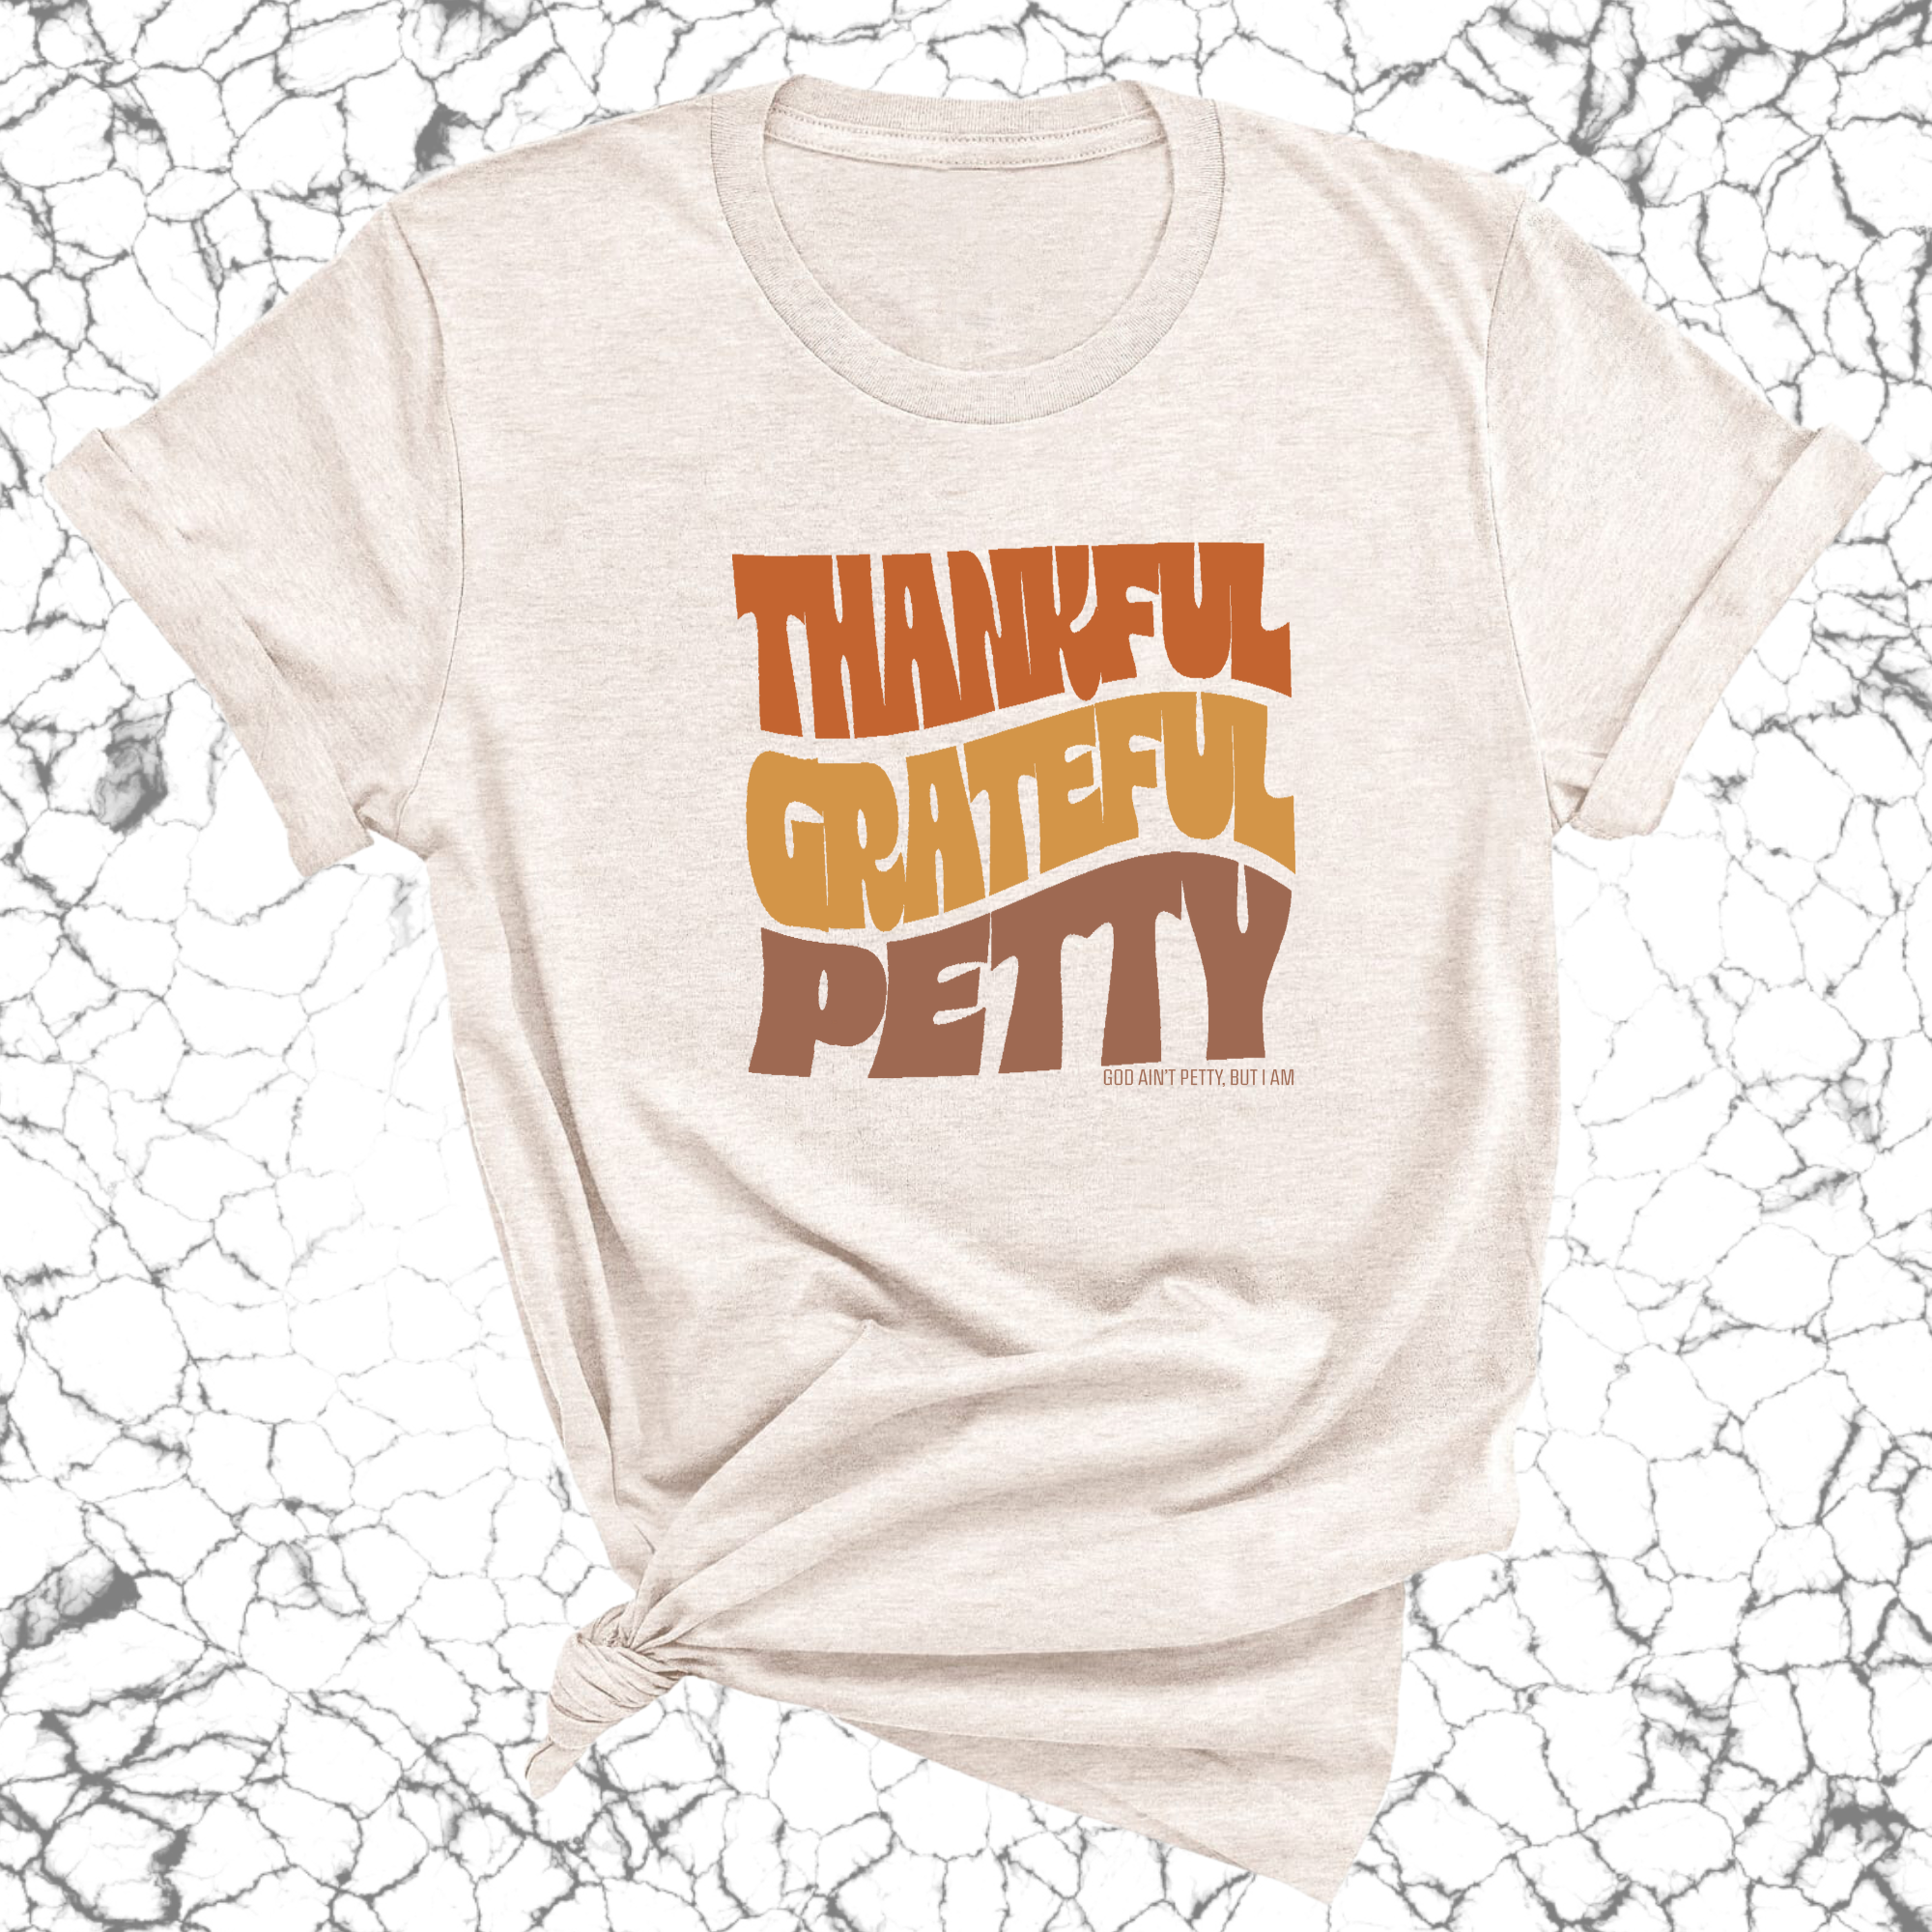 Thankful Grateful Petty Fall Colors Unisex Tee-T-Shirt-The Original God Ain't Petty But I Am